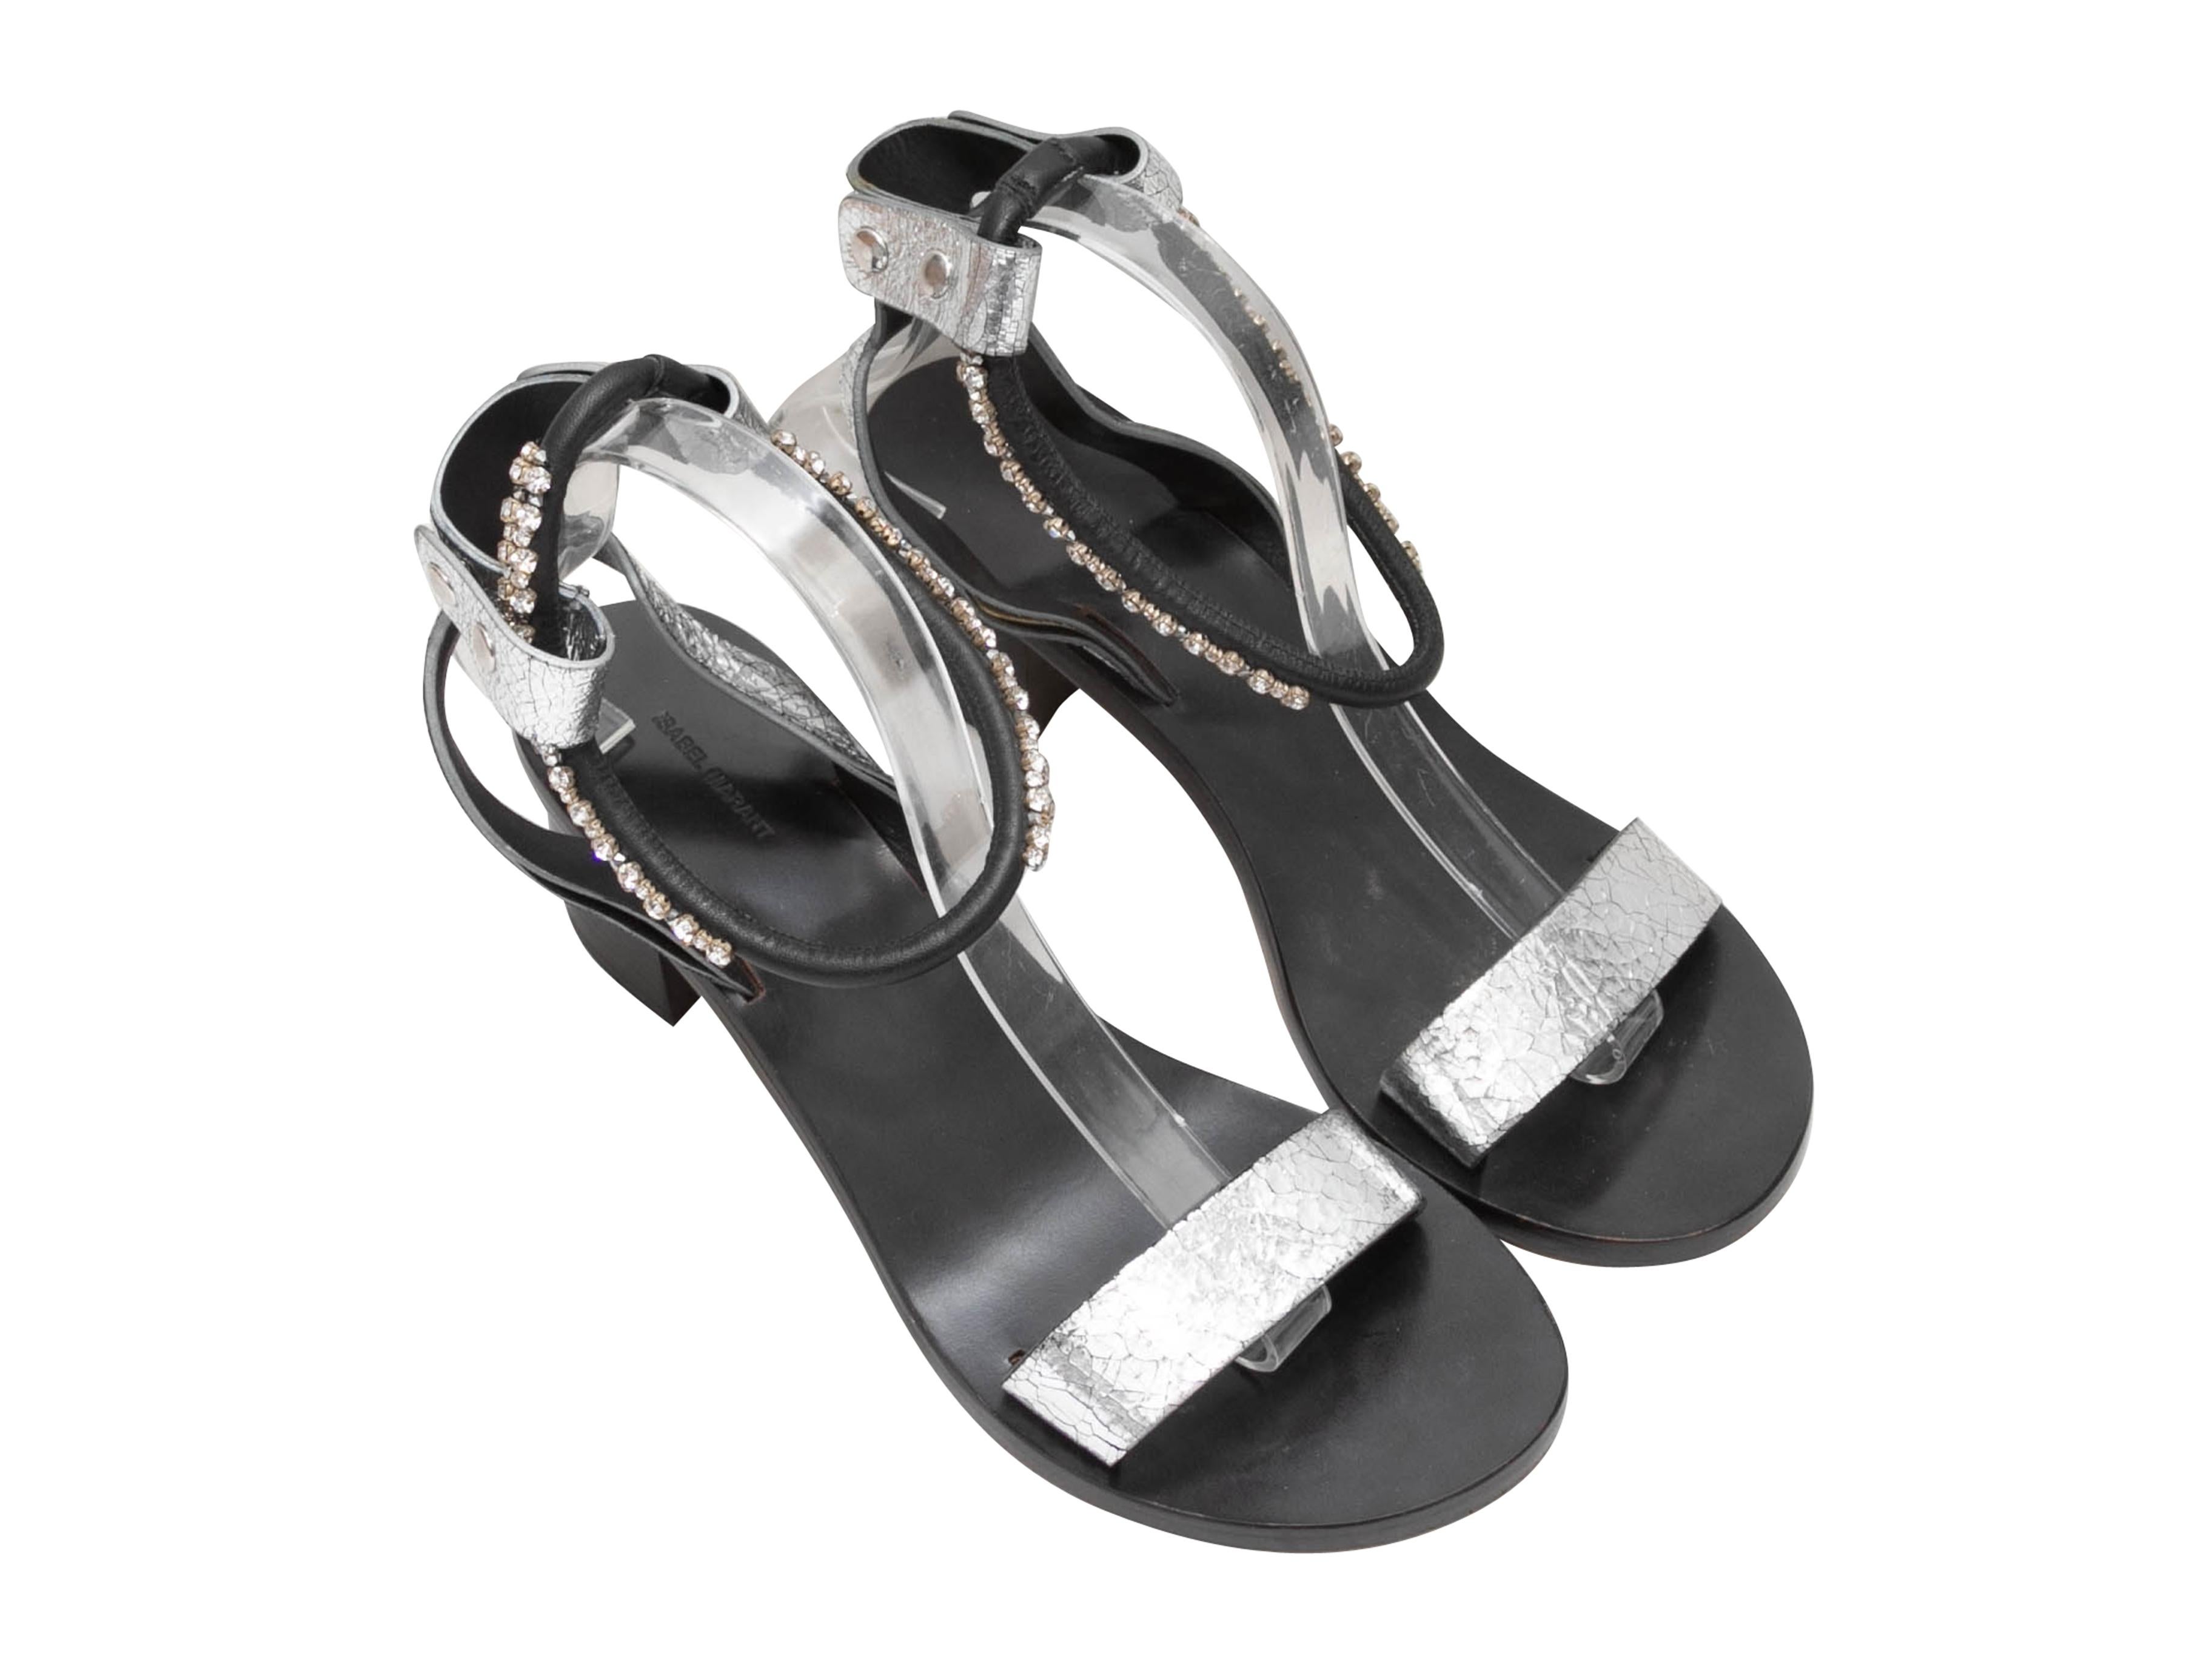  Silver and black Jaeryn crystal-embellished heeled sandals by Isabel Marant. Block heels. Ankle strap closures. 2.25